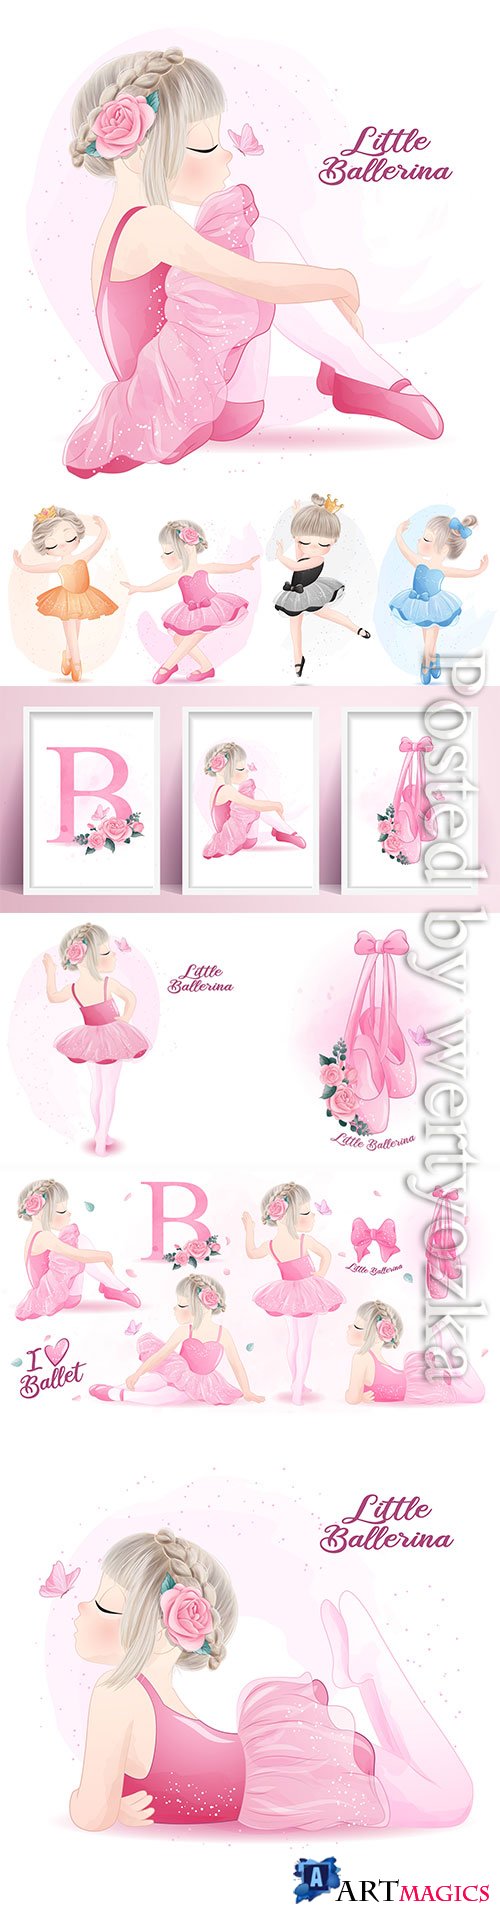 Cute girl ballerina watercolor illustration vector set